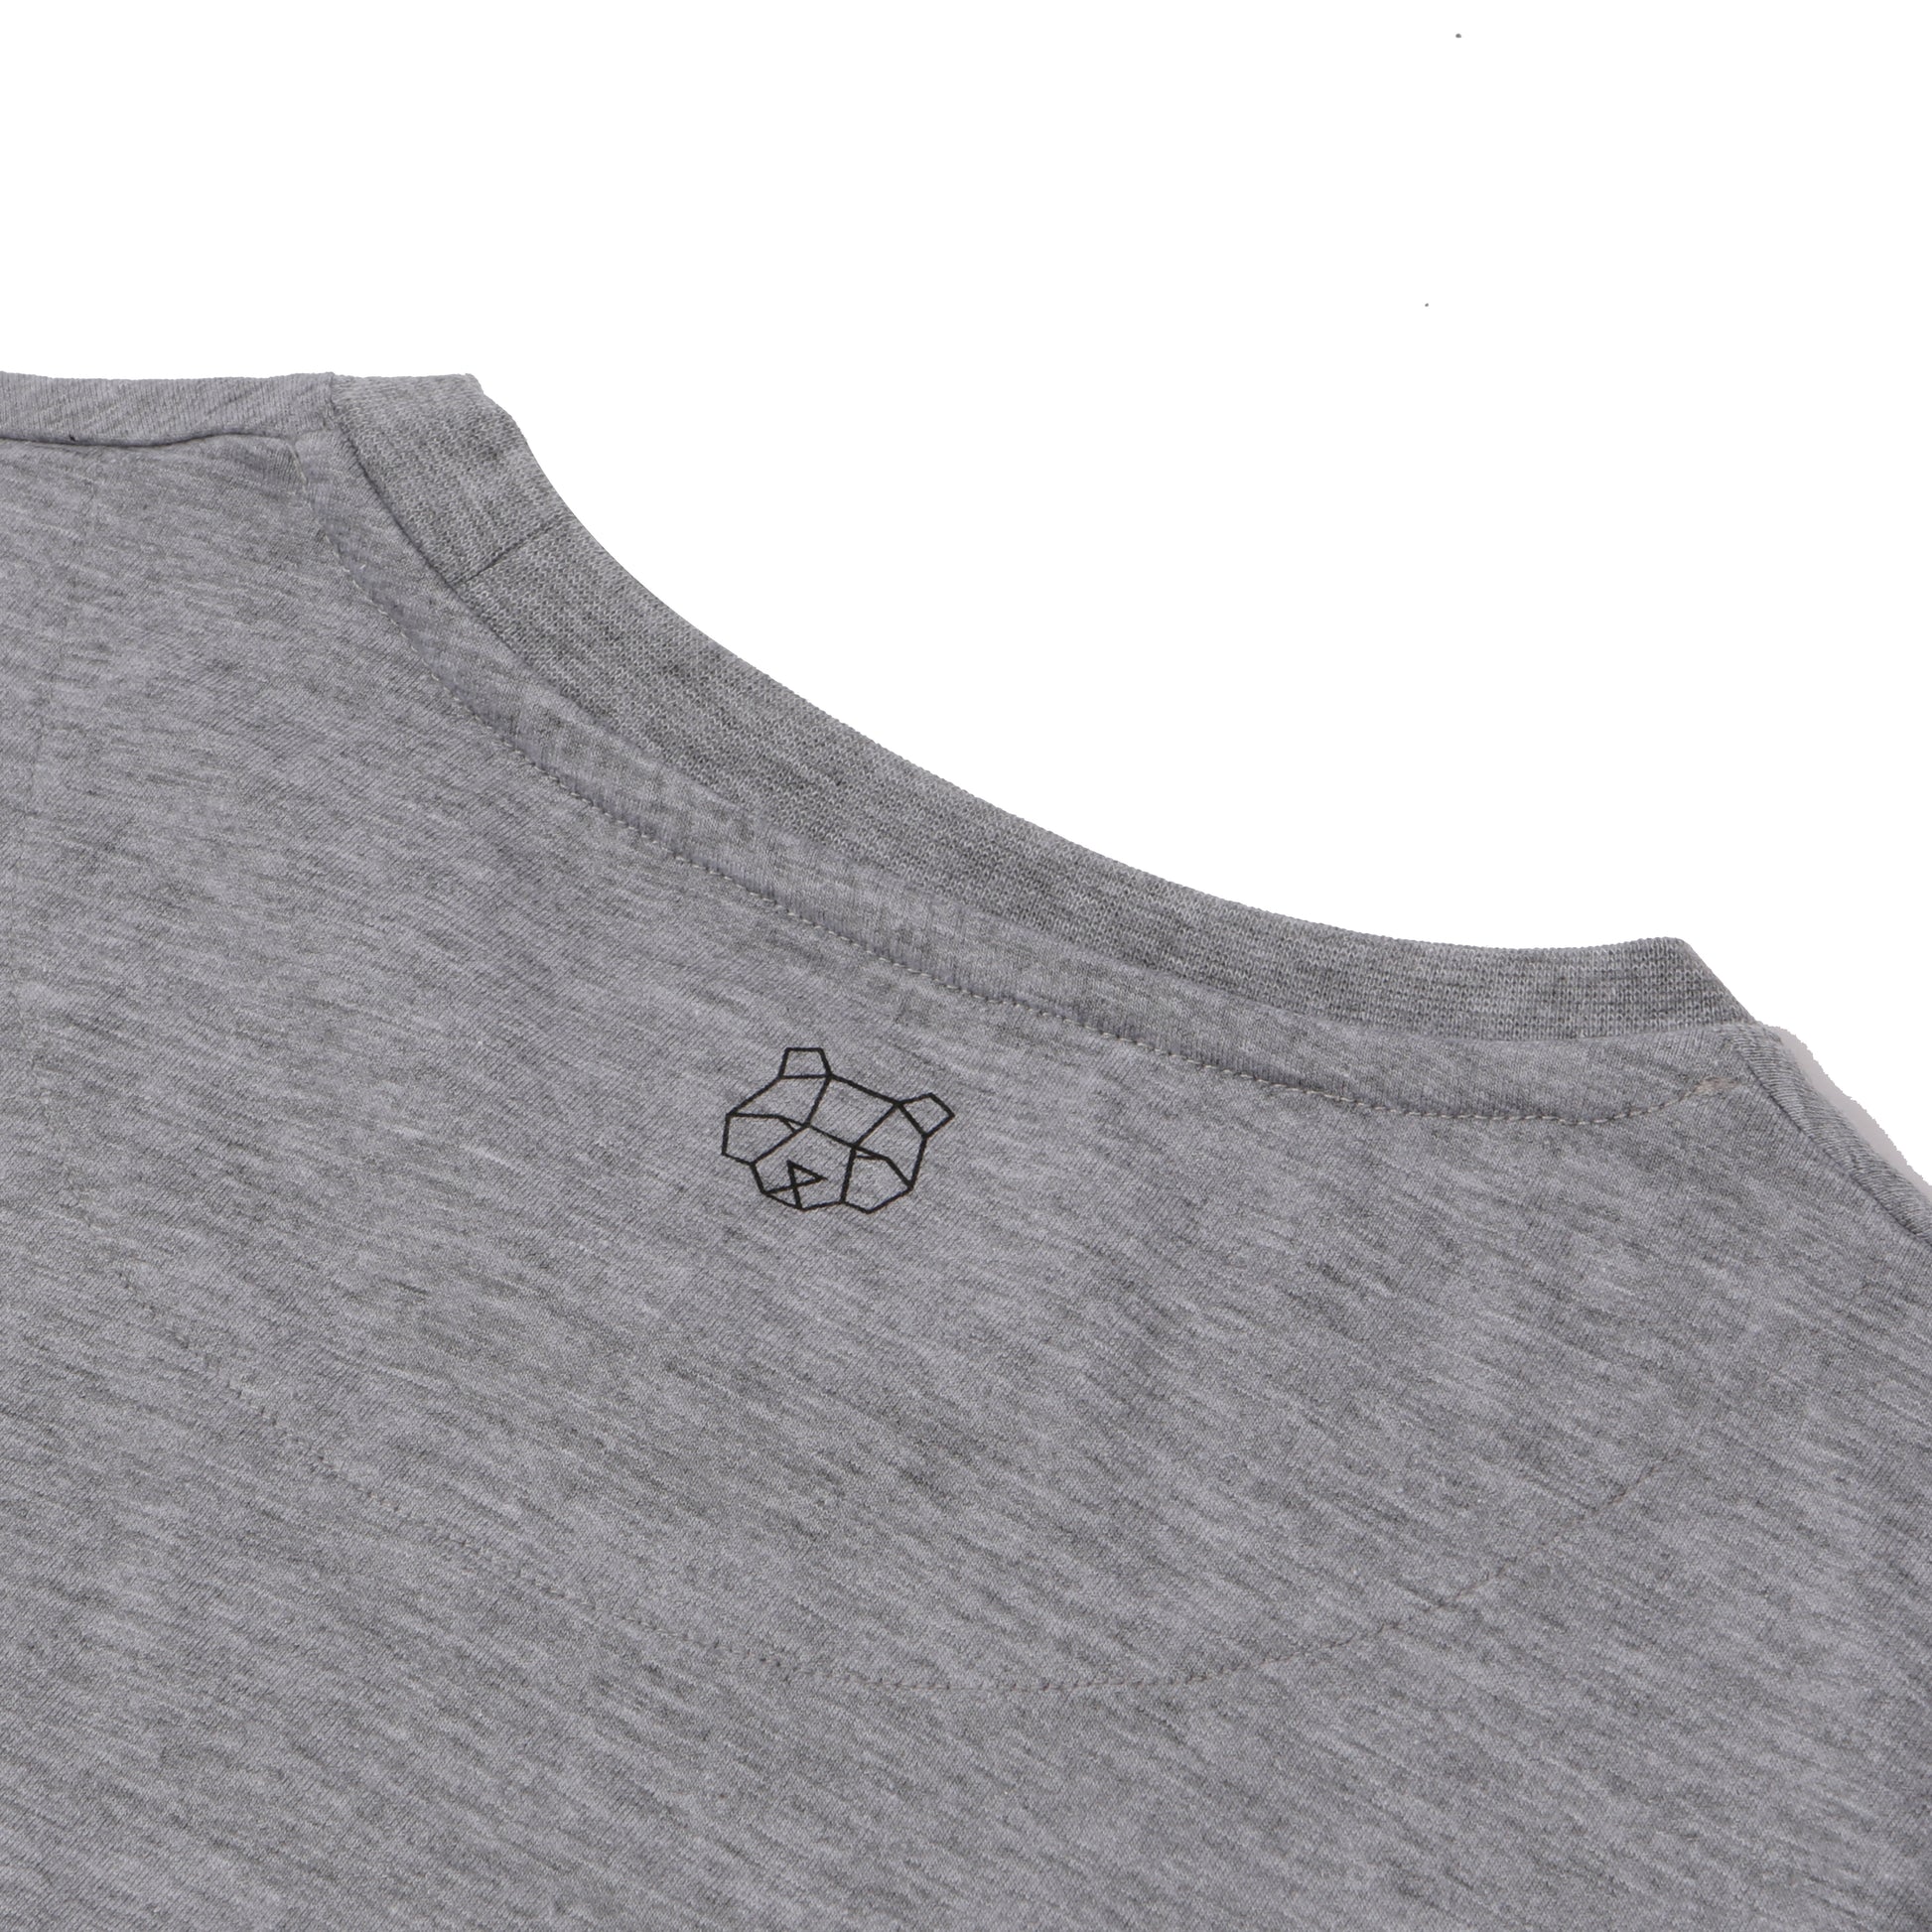 grey menswear t-shirt bear cub Wiley hype beast supreme style